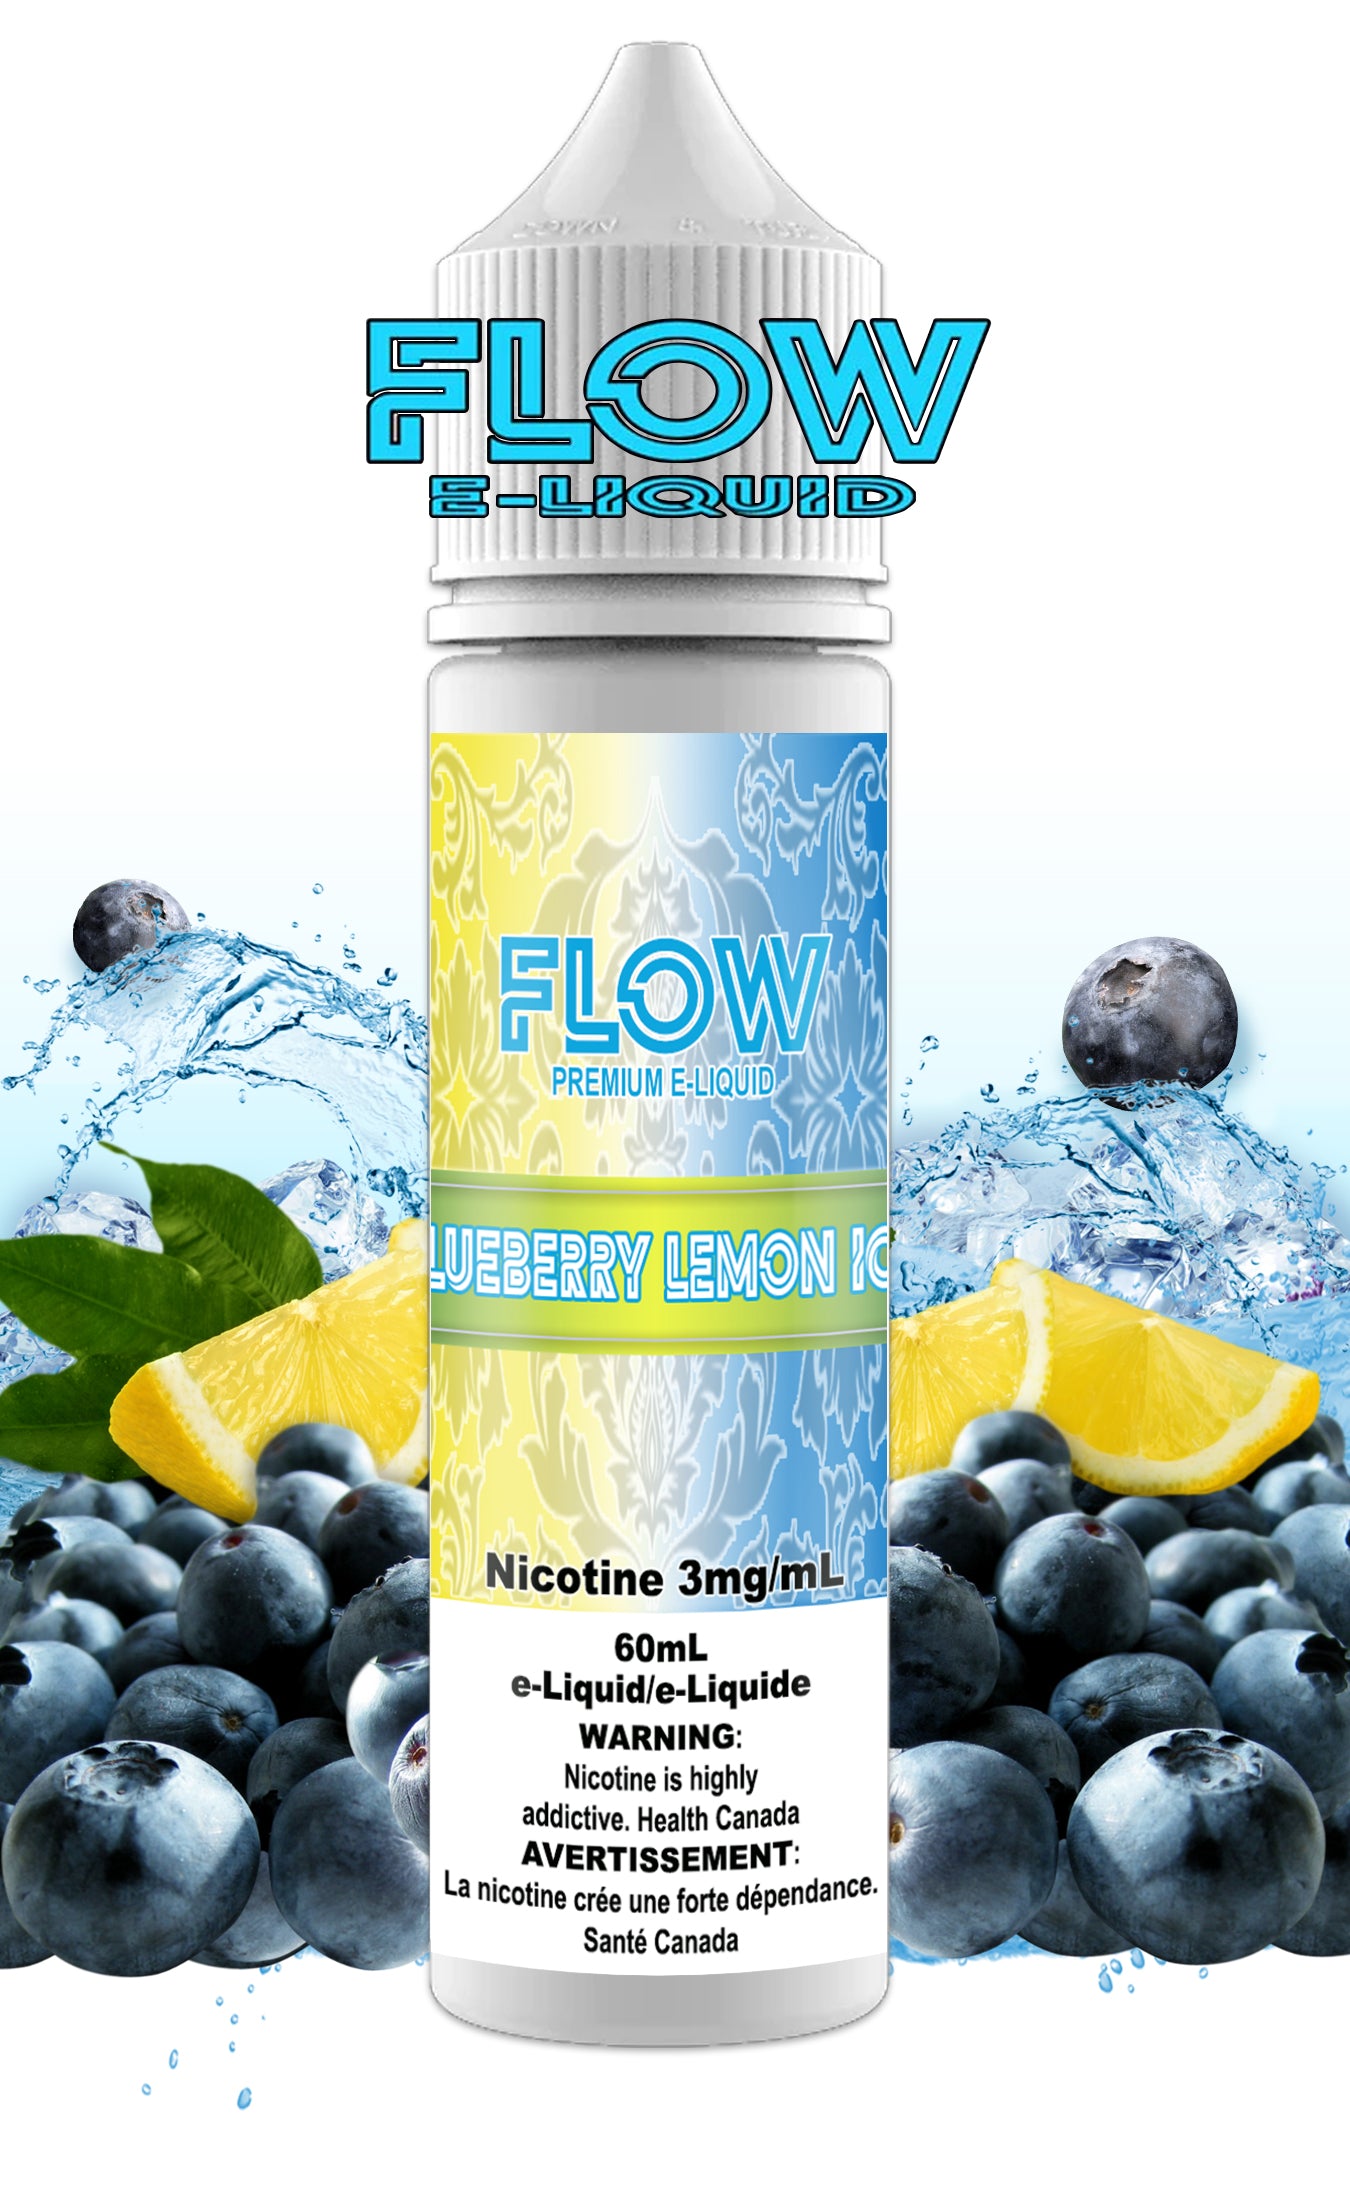 FLOW E-LIQUID - BLUEBERRY LEMON ICE